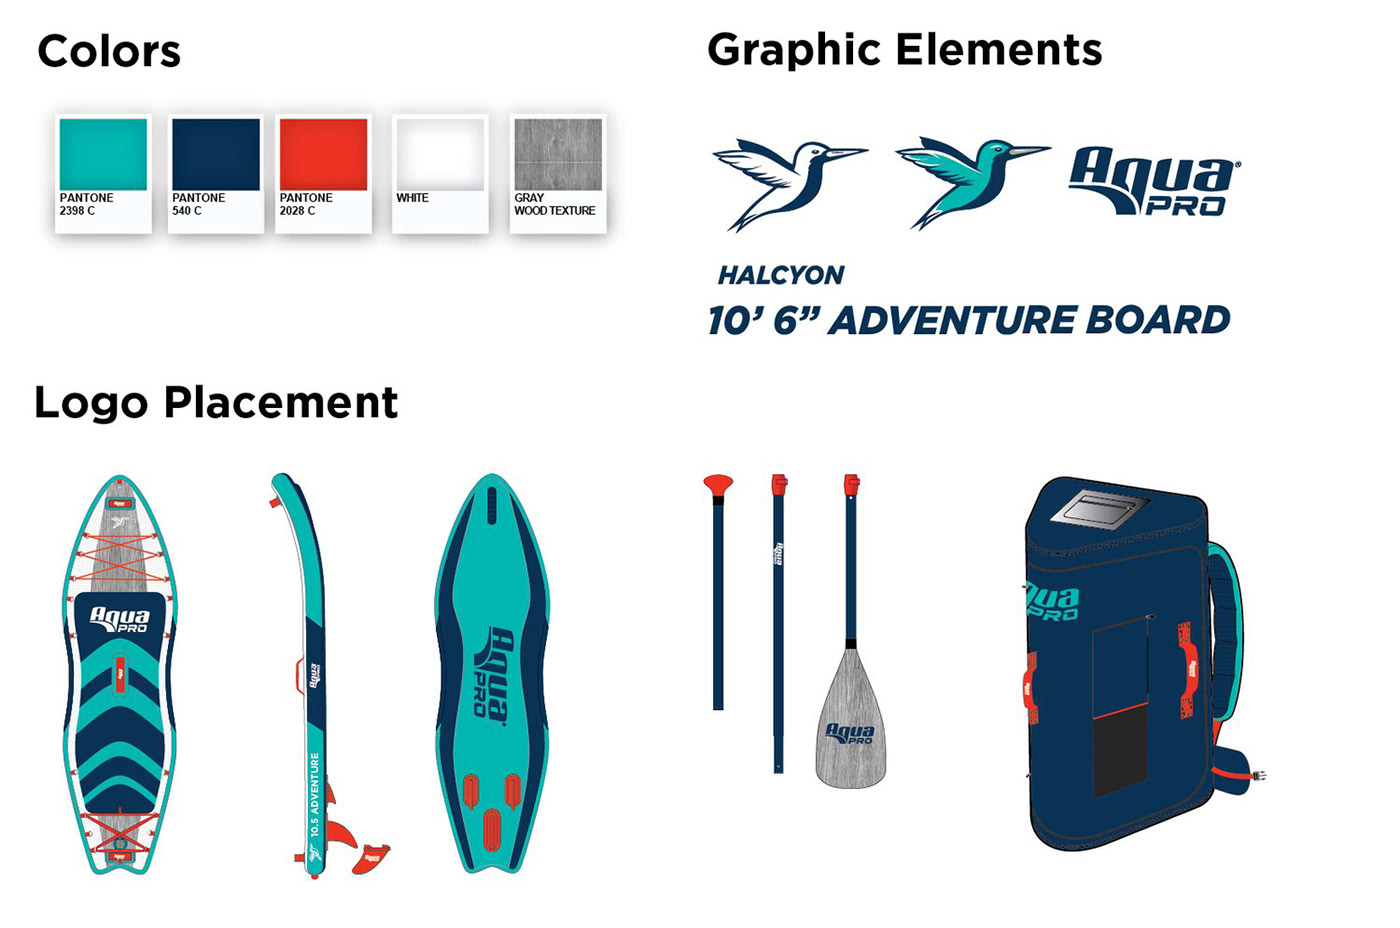 sup paddle board sports product patent Dropstitch